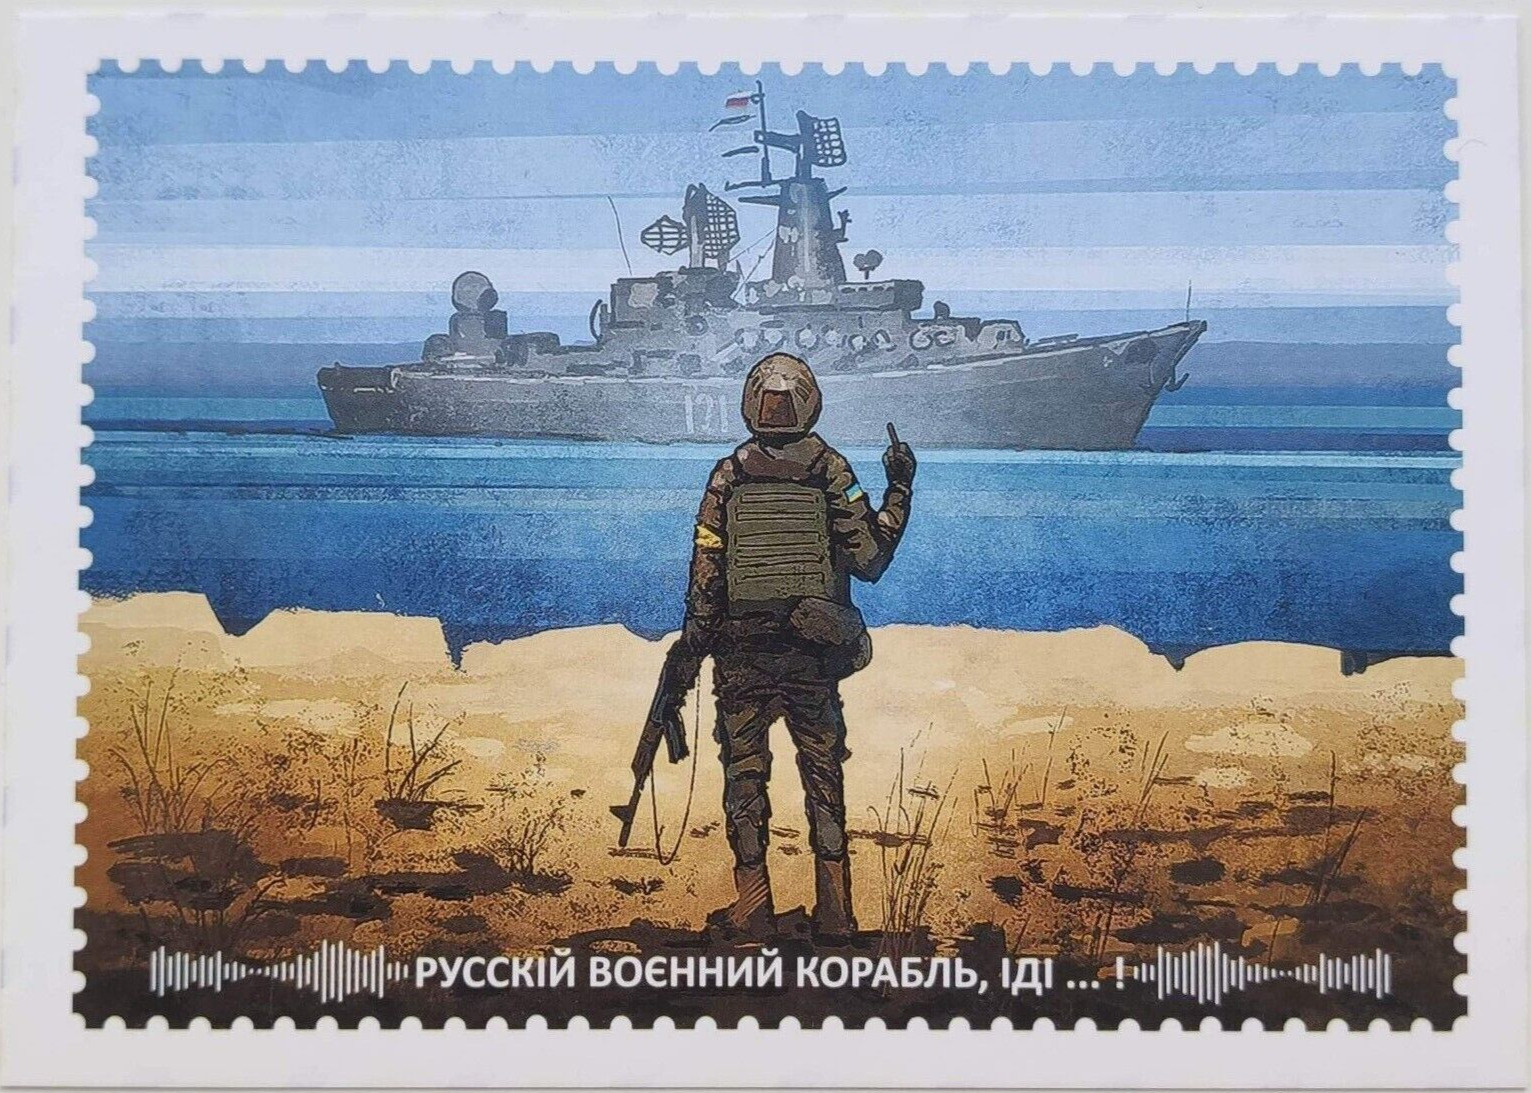 Ukraine Stamps Limited Russian warship DONE Ukrainian Postal Postcards Ukraine